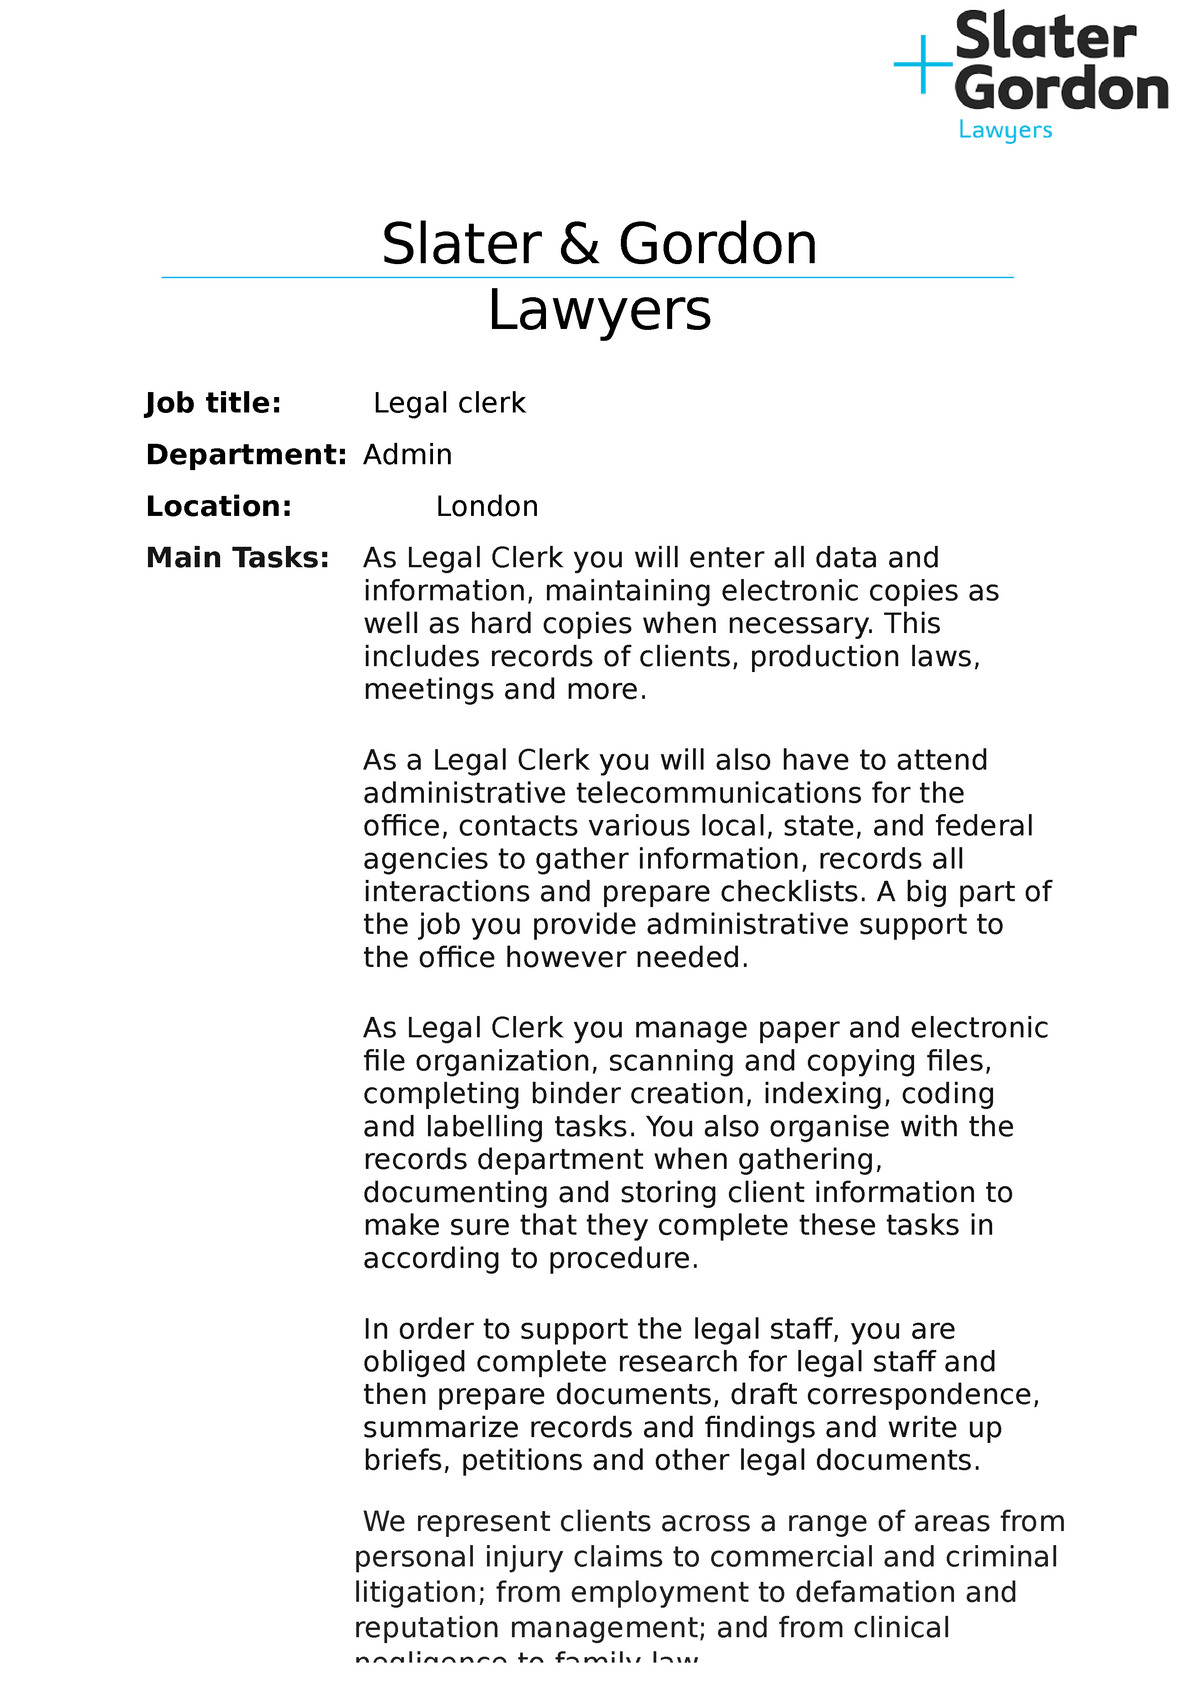 Job description ( legal clerk) Slater Gordon Lawyers Job title